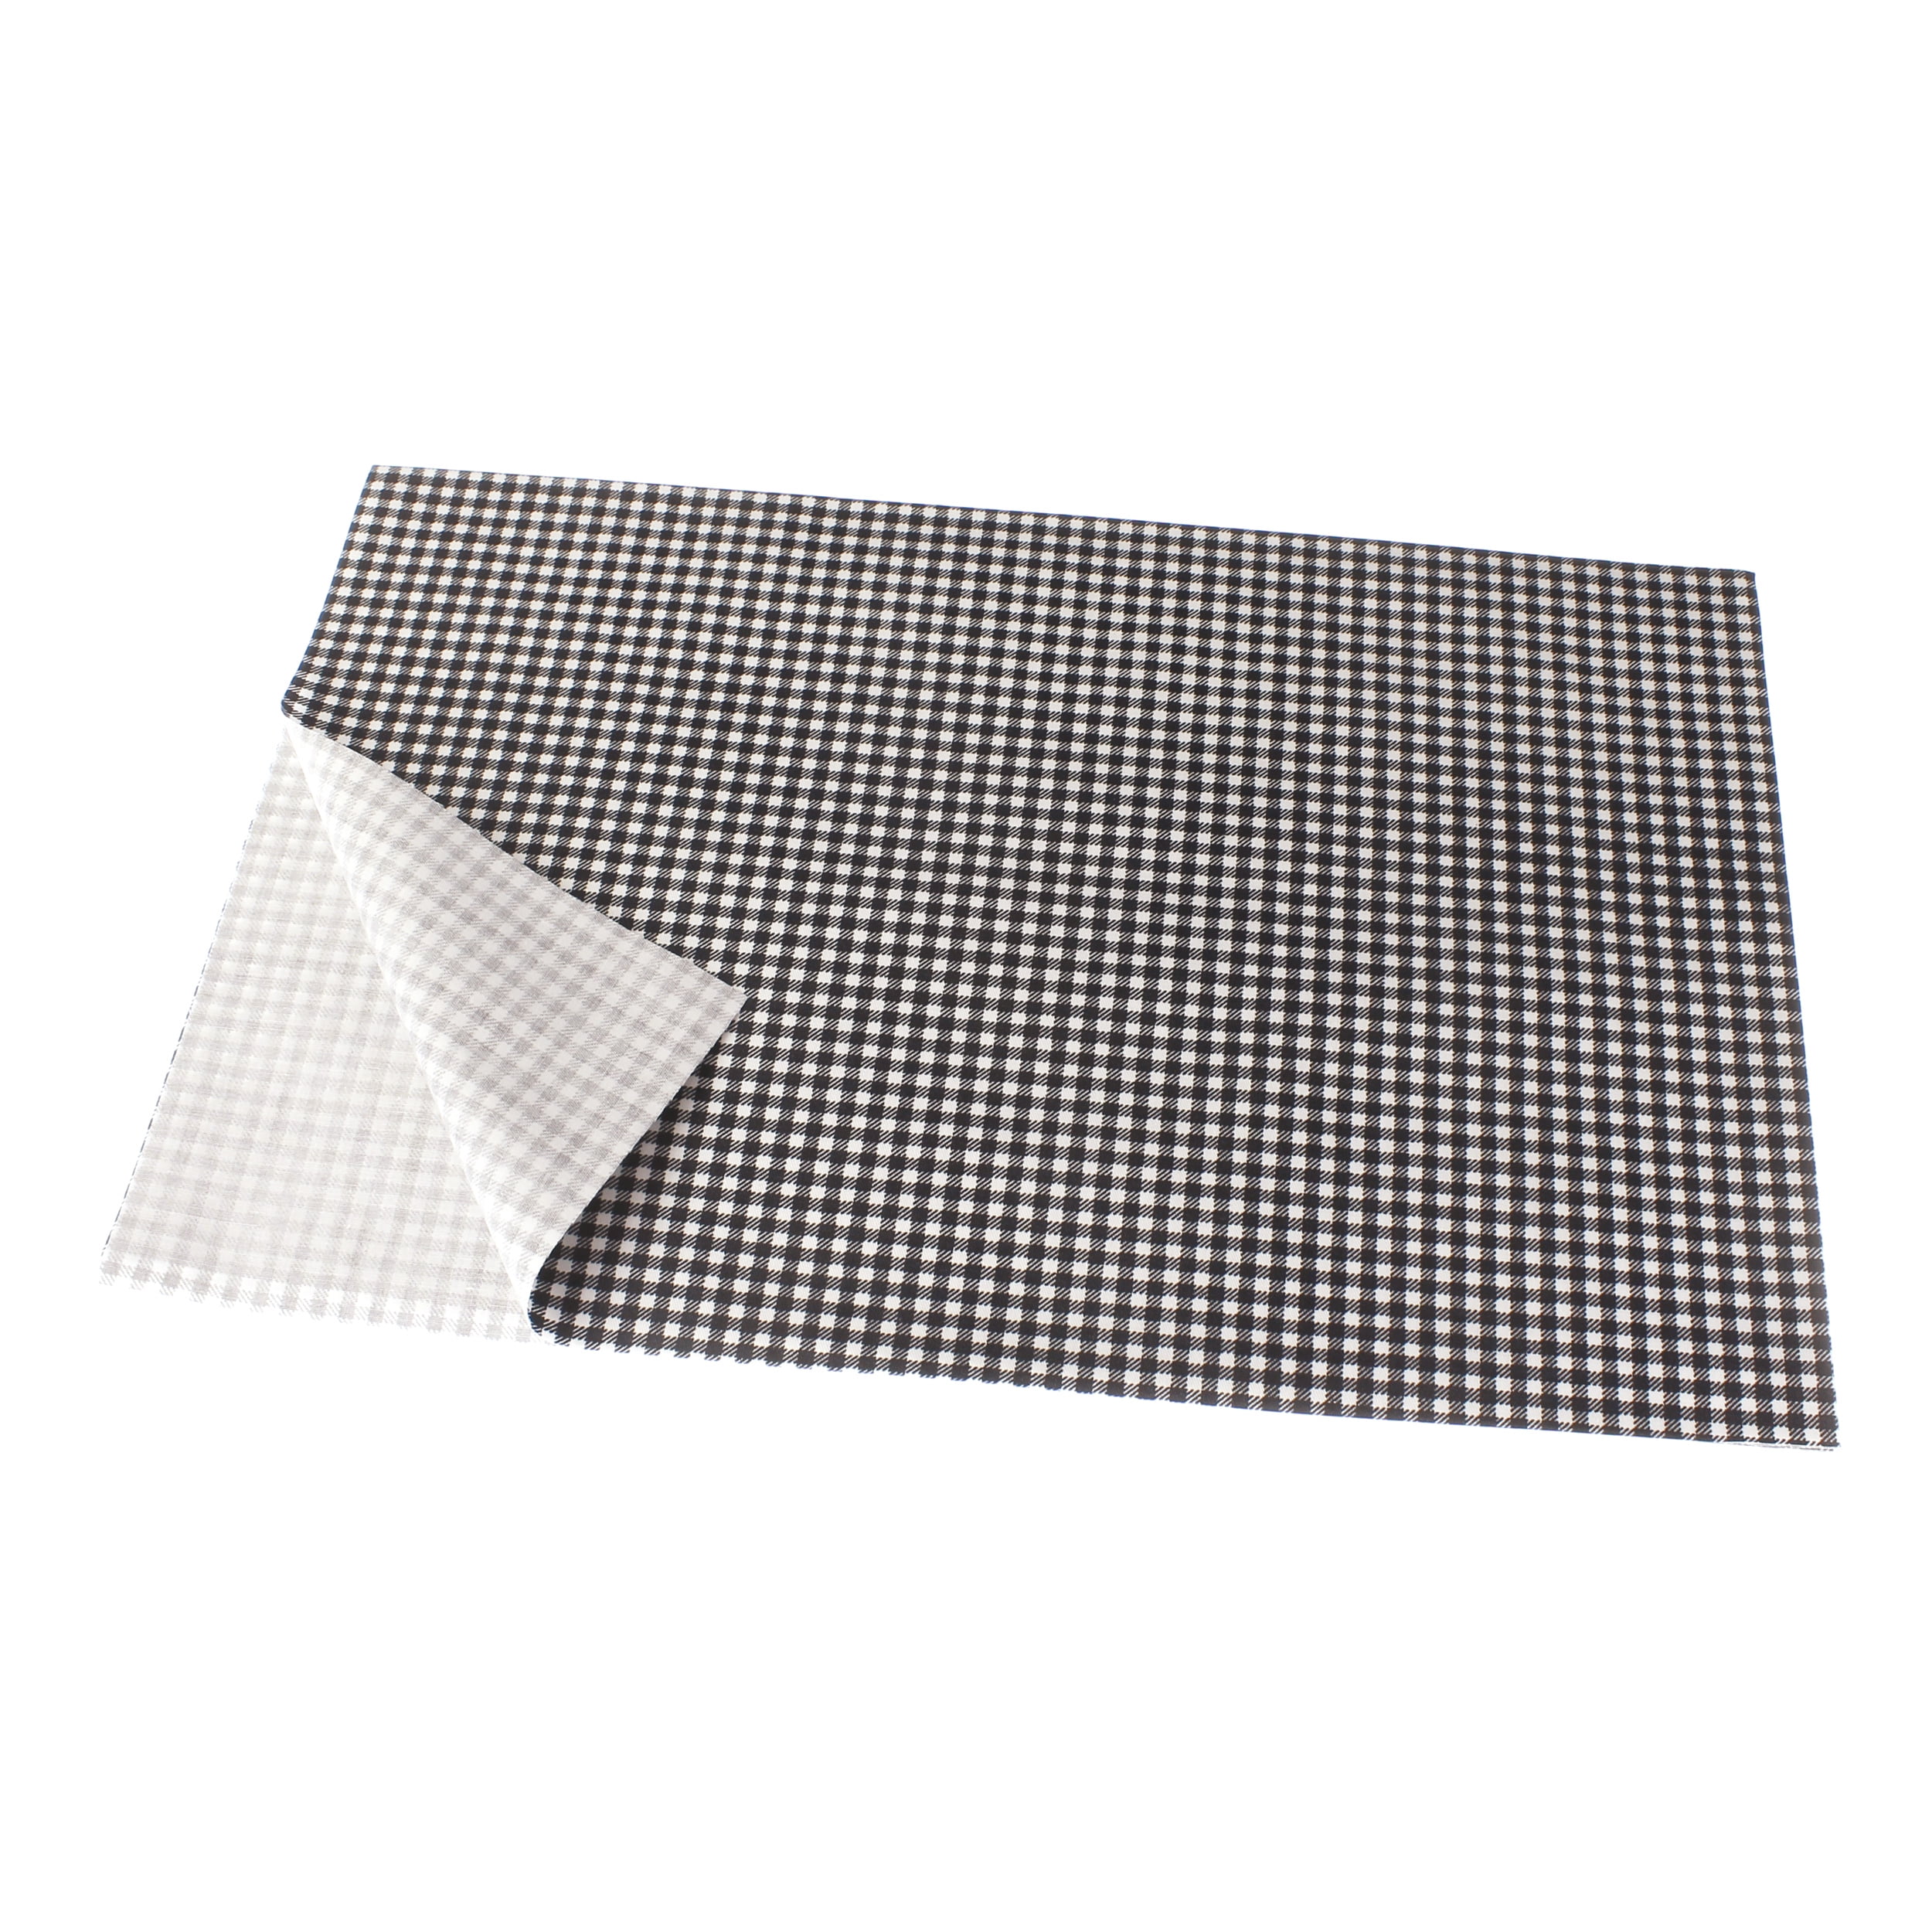 Hanjunzhao Black White Fat Quarters Fabric Bundles, Precut Sewing Quilting Fabric, 18 x 22 Inches